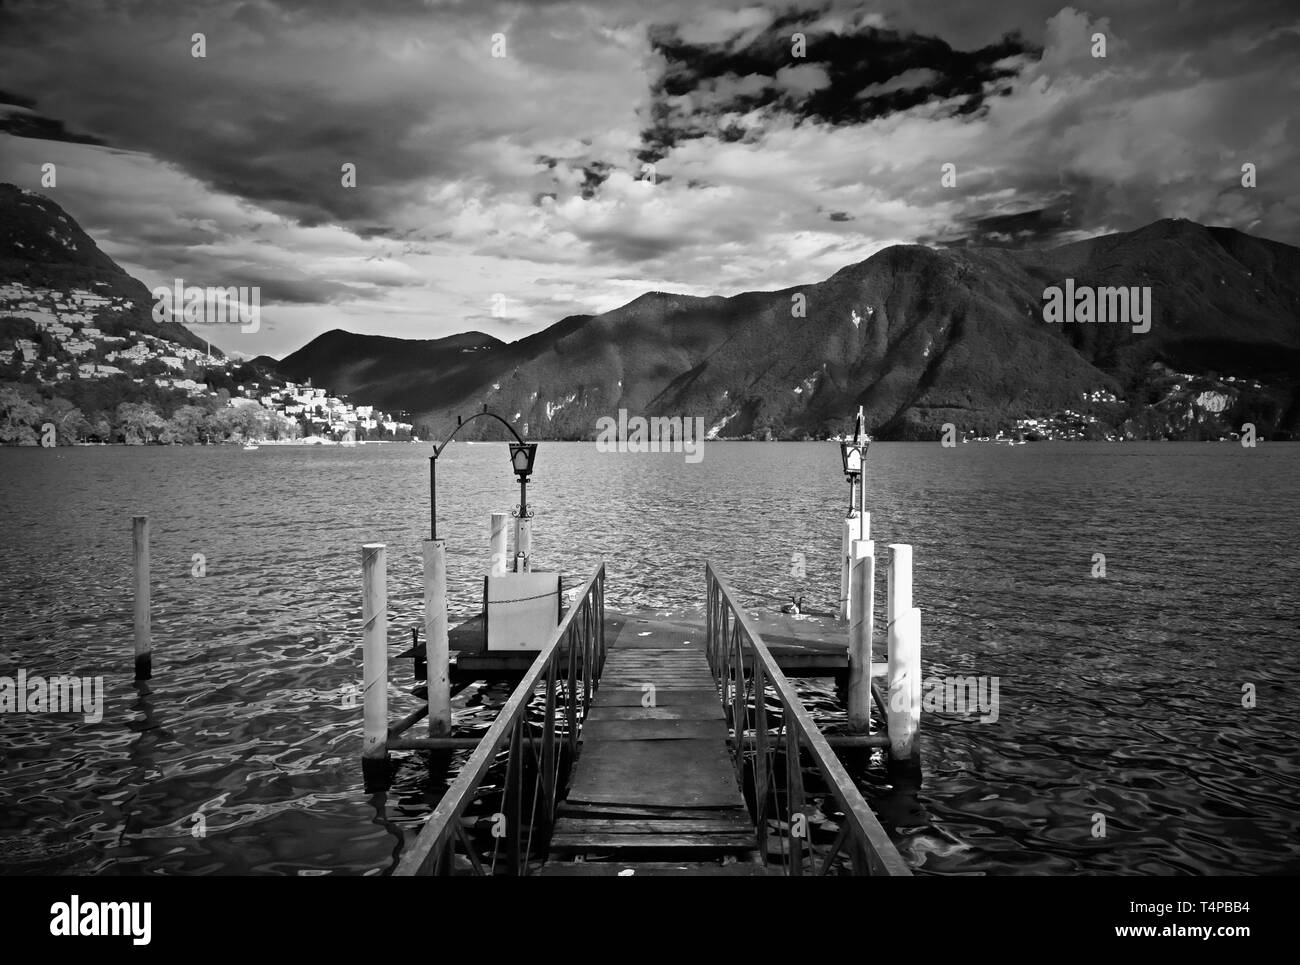 Lugano Black and White Stock Photos & Images - Alamy